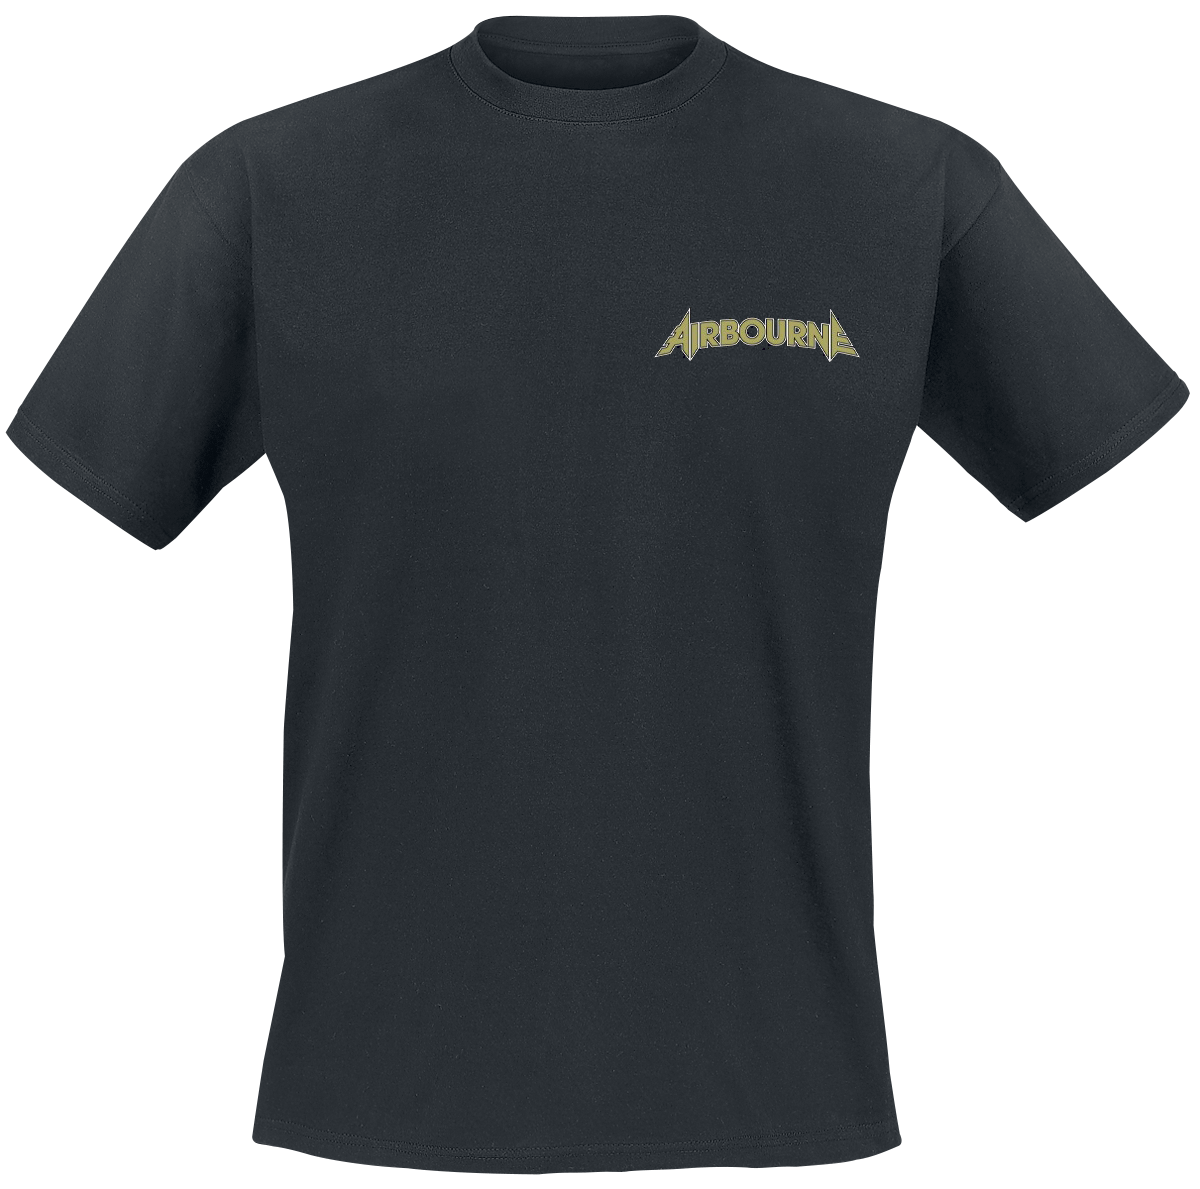 Airbourne - Unti I Die - T-Shirt - black image